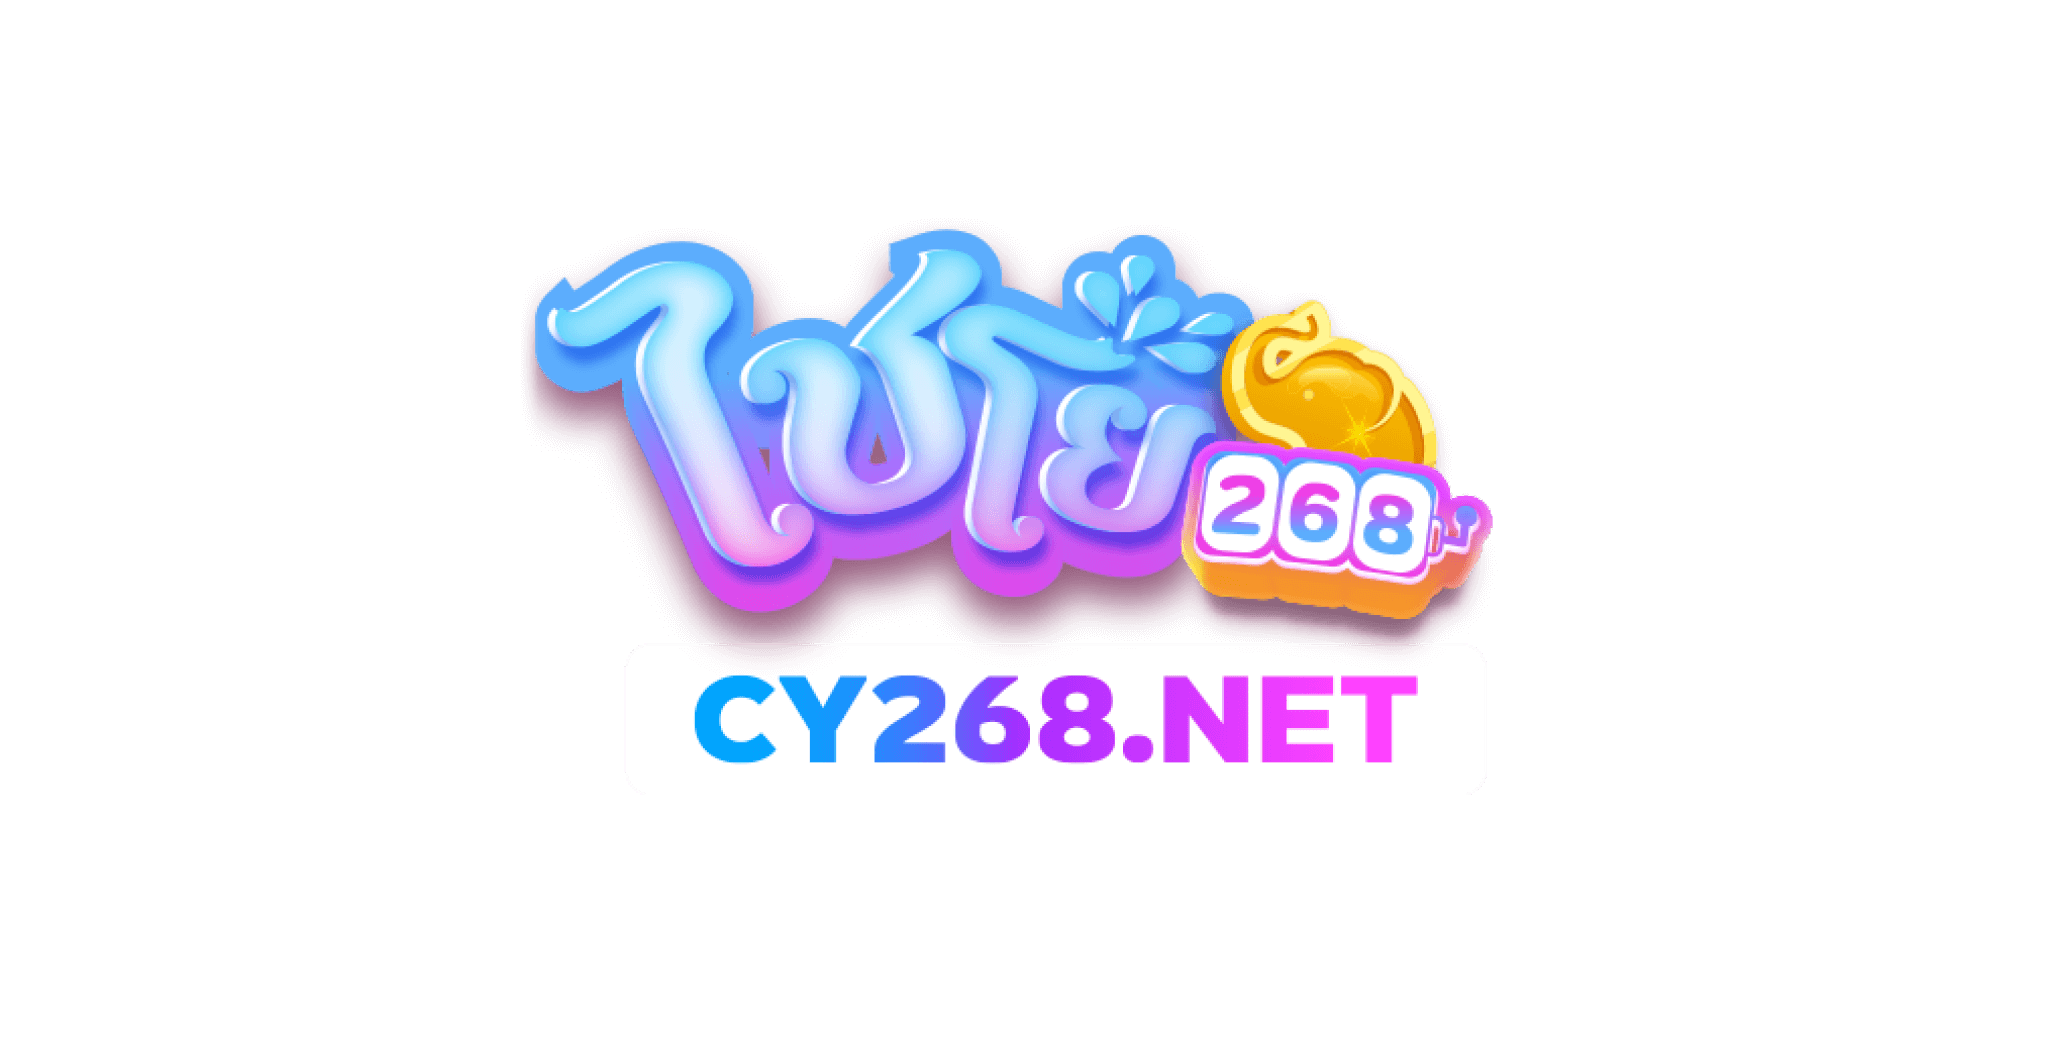 cy268 logo